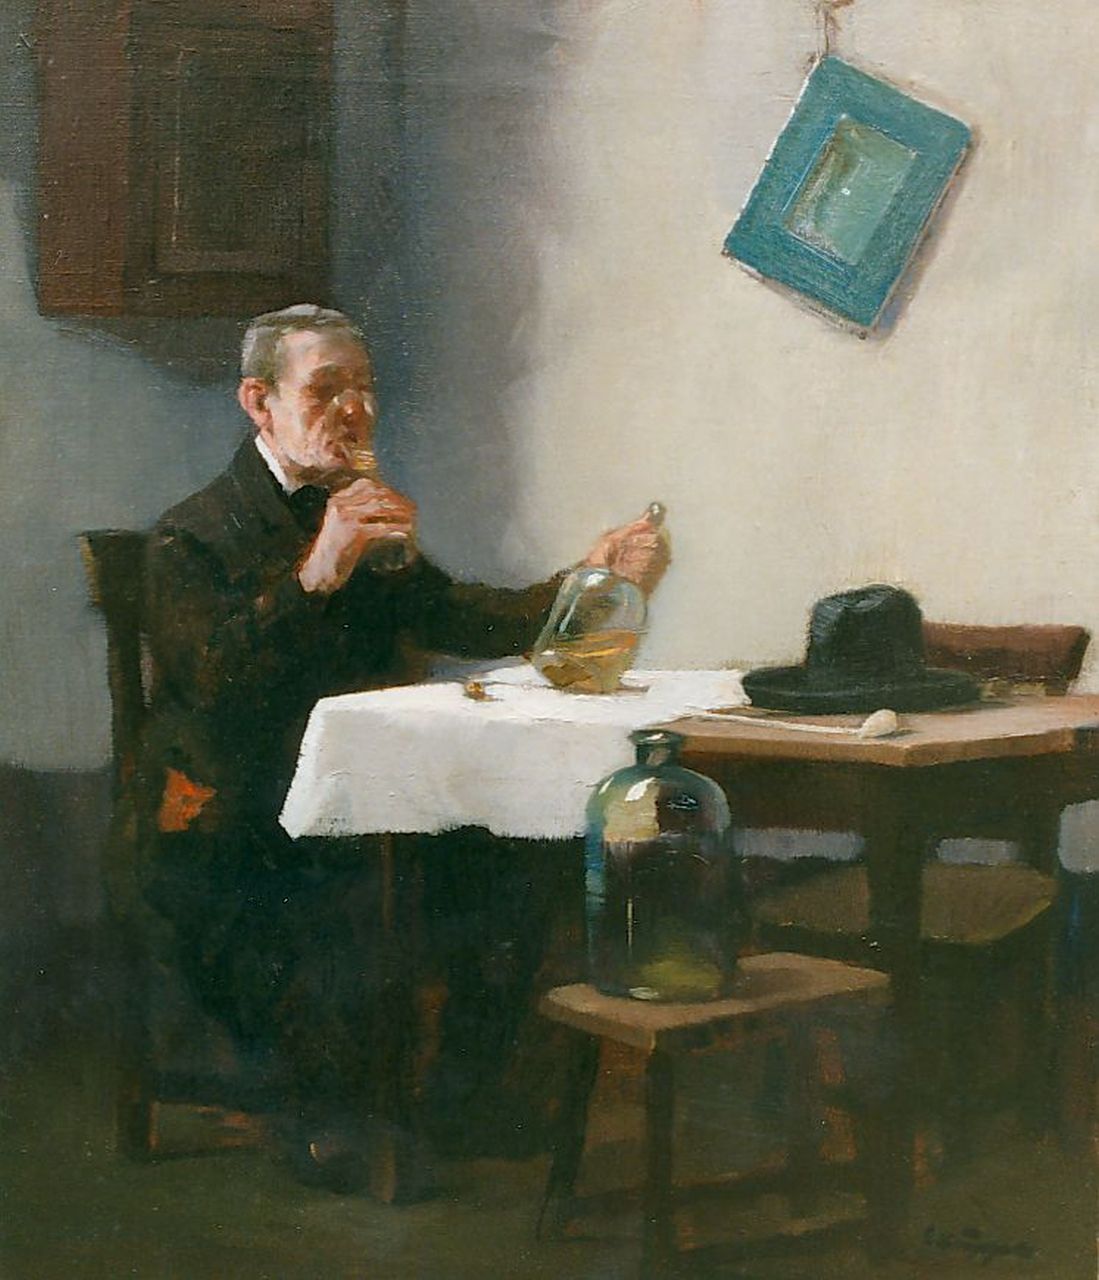 Küppers L.  | Leo Küppers, The wine-taster, Öl auf Leinwand 54,5 x 46,2 cm, signed l.r.